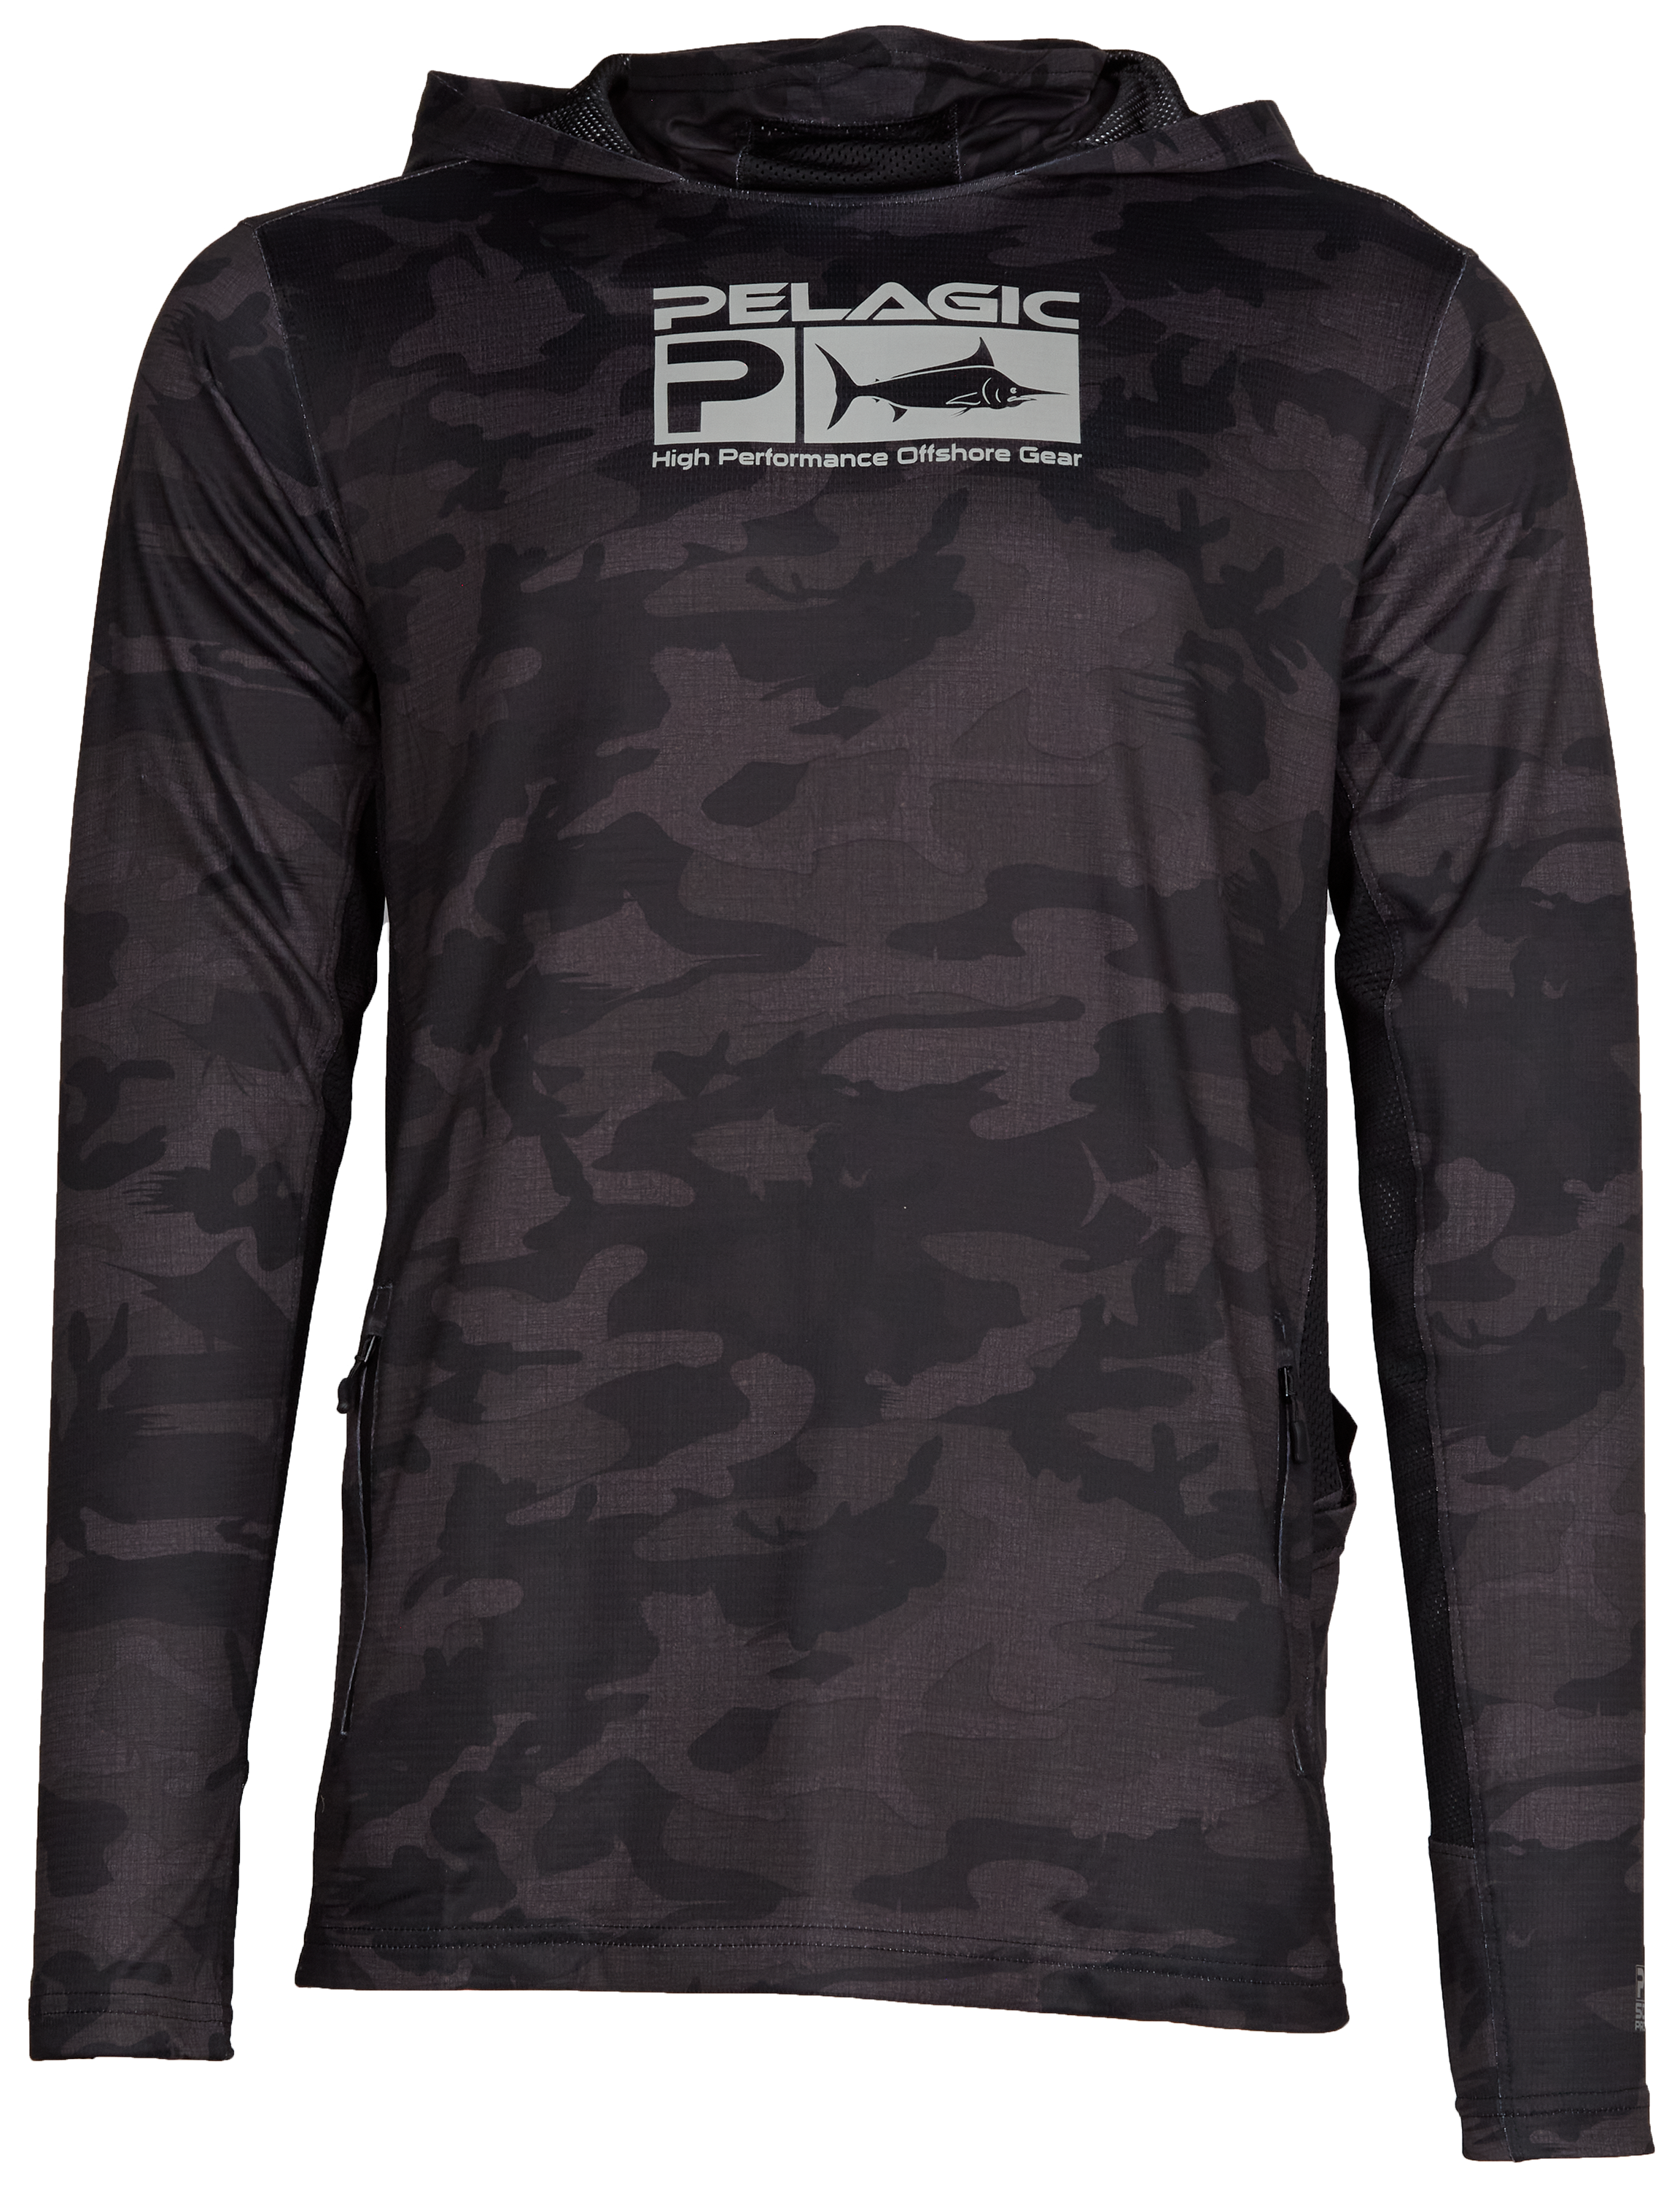 Pelagic Long Sleeve Hooded Fishing Shirt - Bigbitefishingshirts